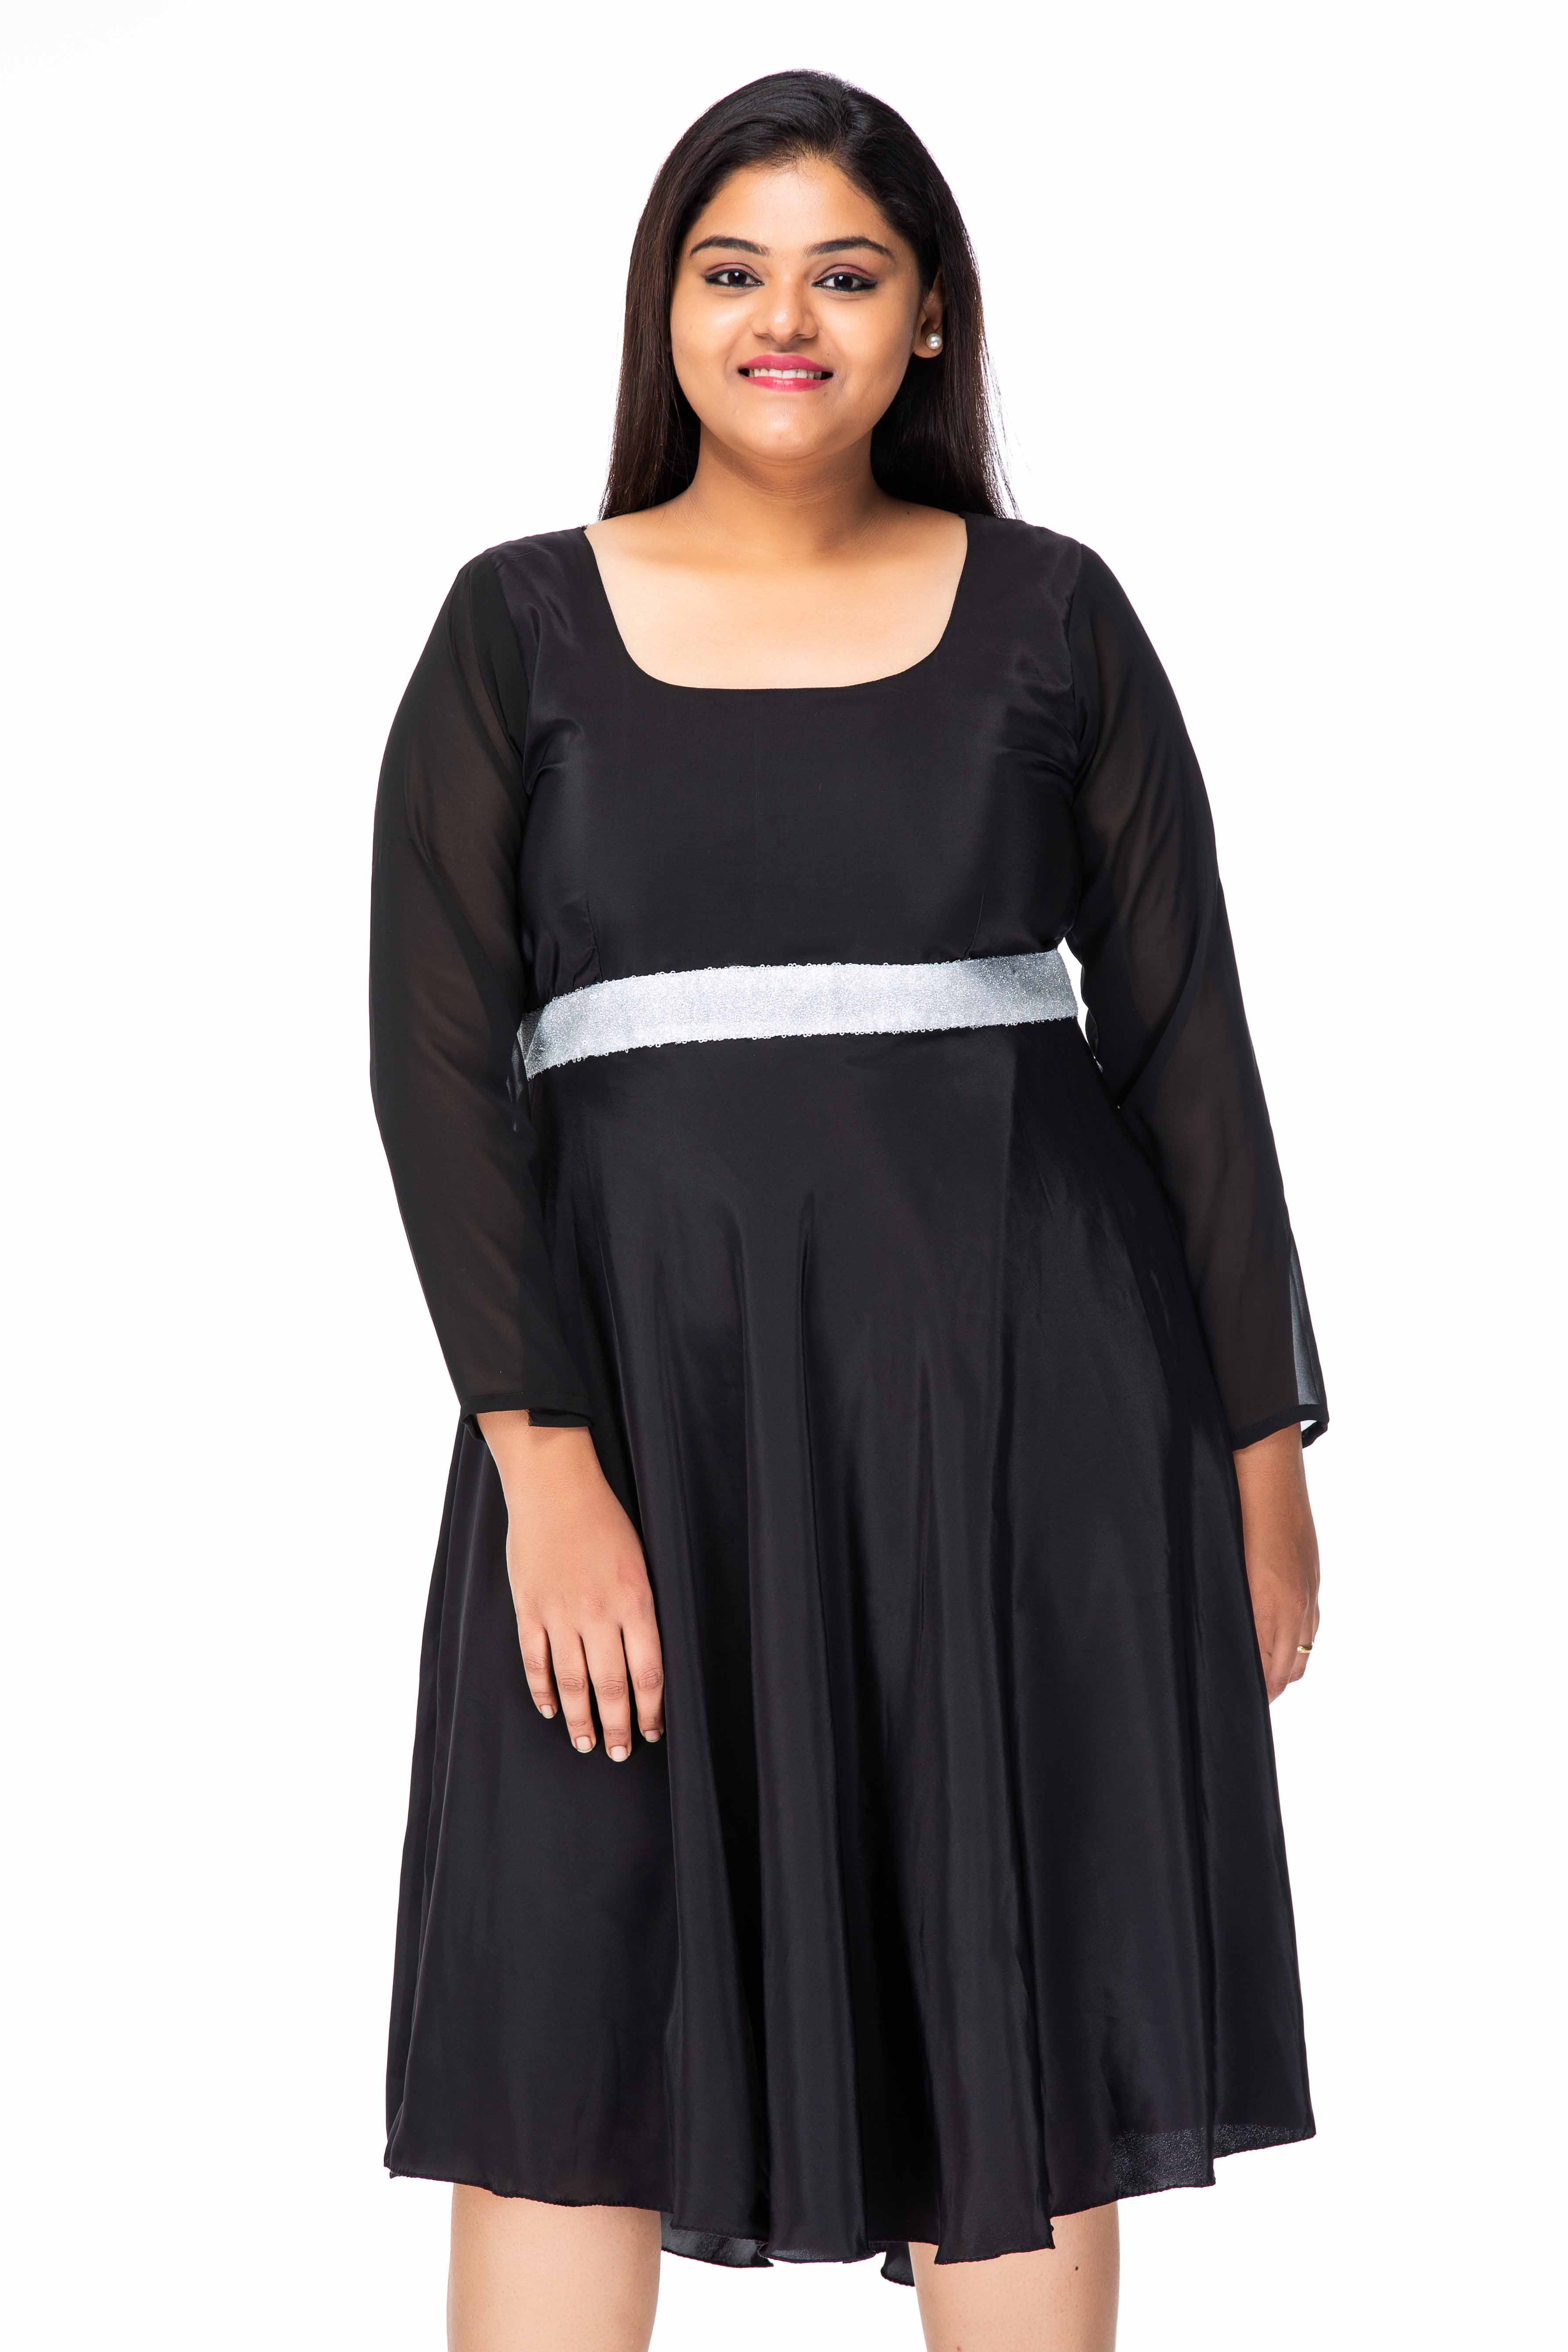 Knee Length Dress - Plus Size Dress - Black Party Wear Dress - Lotuslane